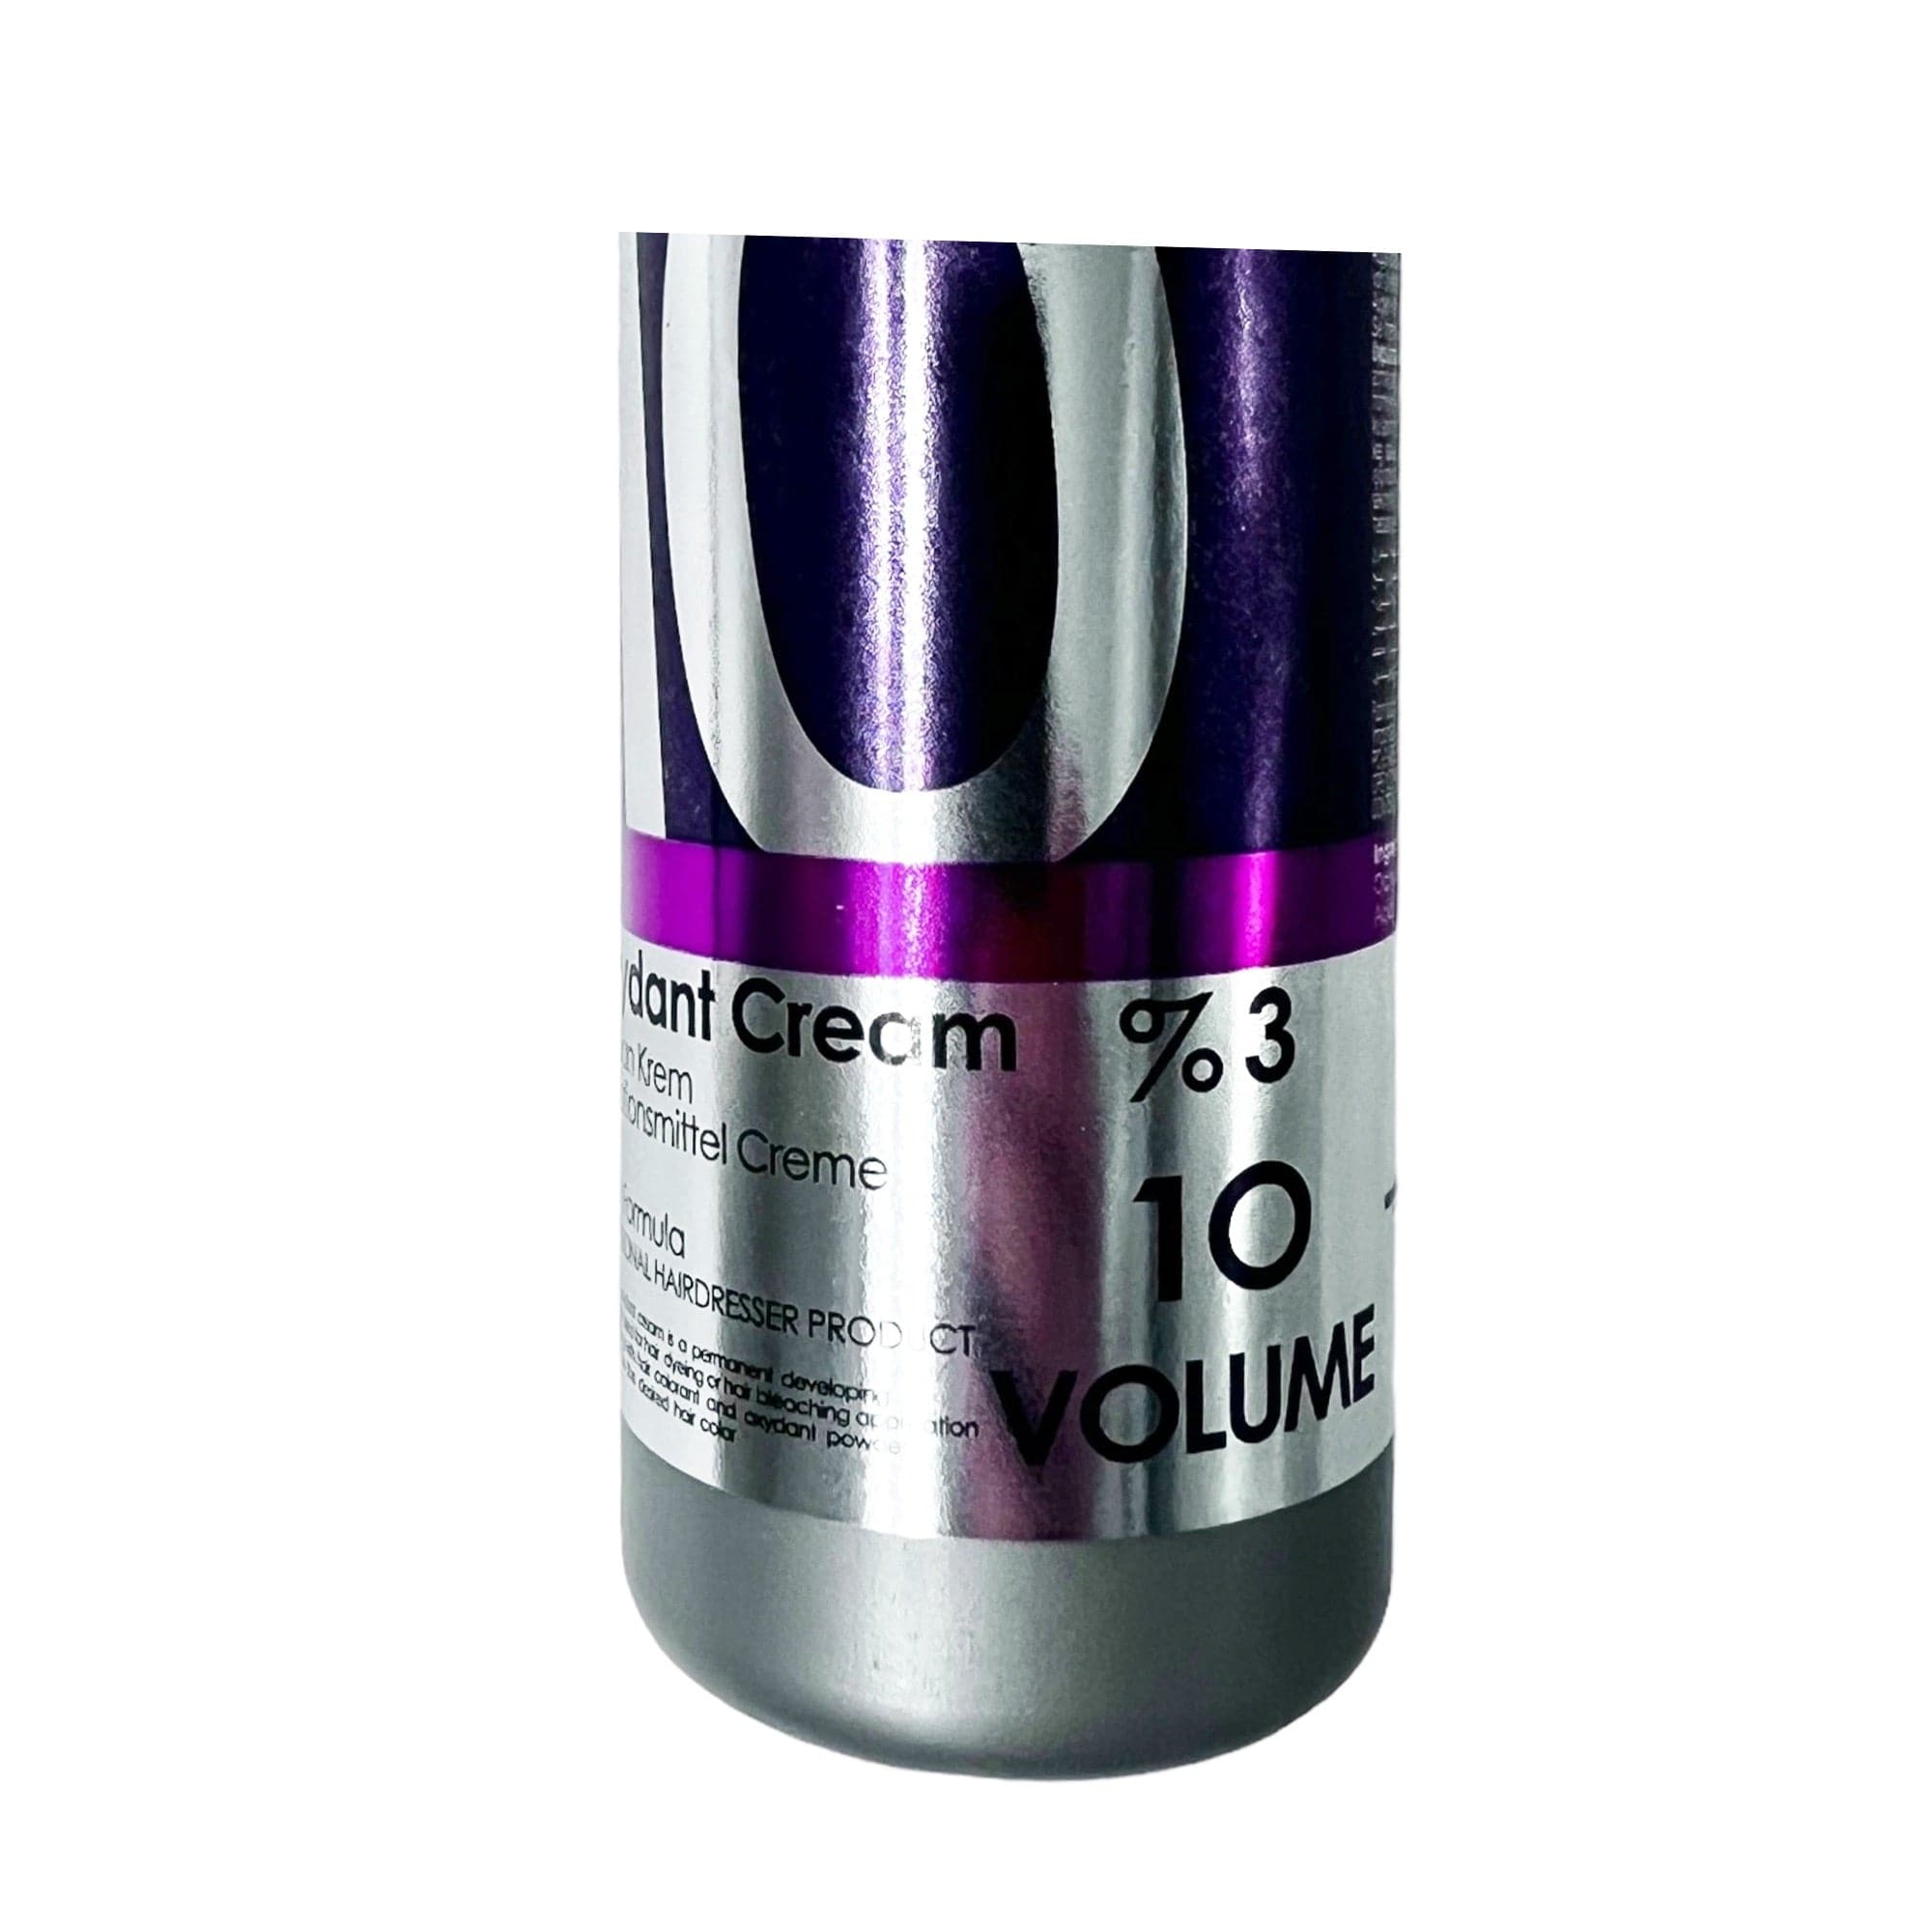 Morfose - 10 Oxidant Cream 10 Volume 150ml